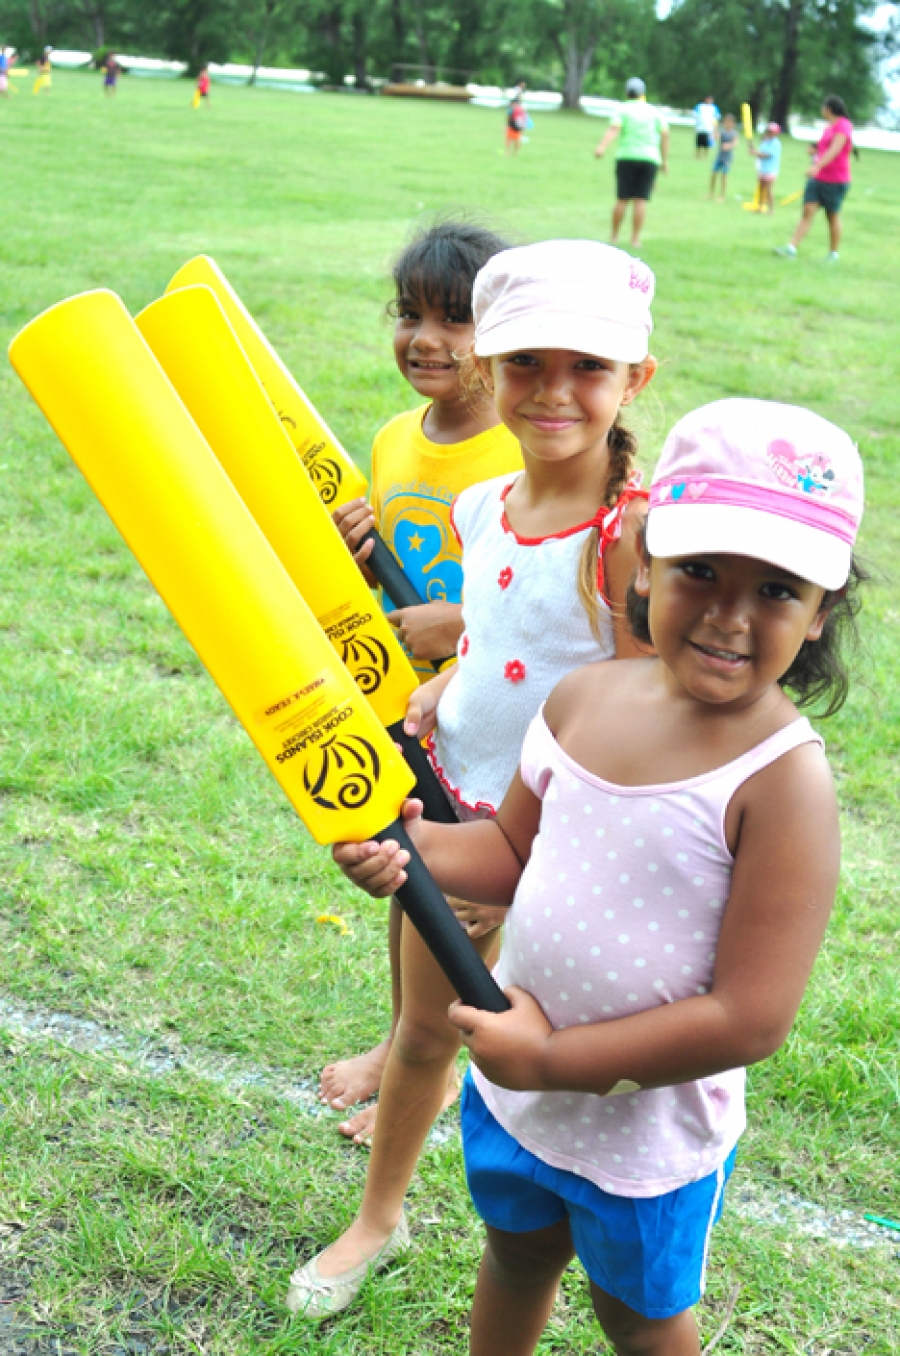 Kids love cricket